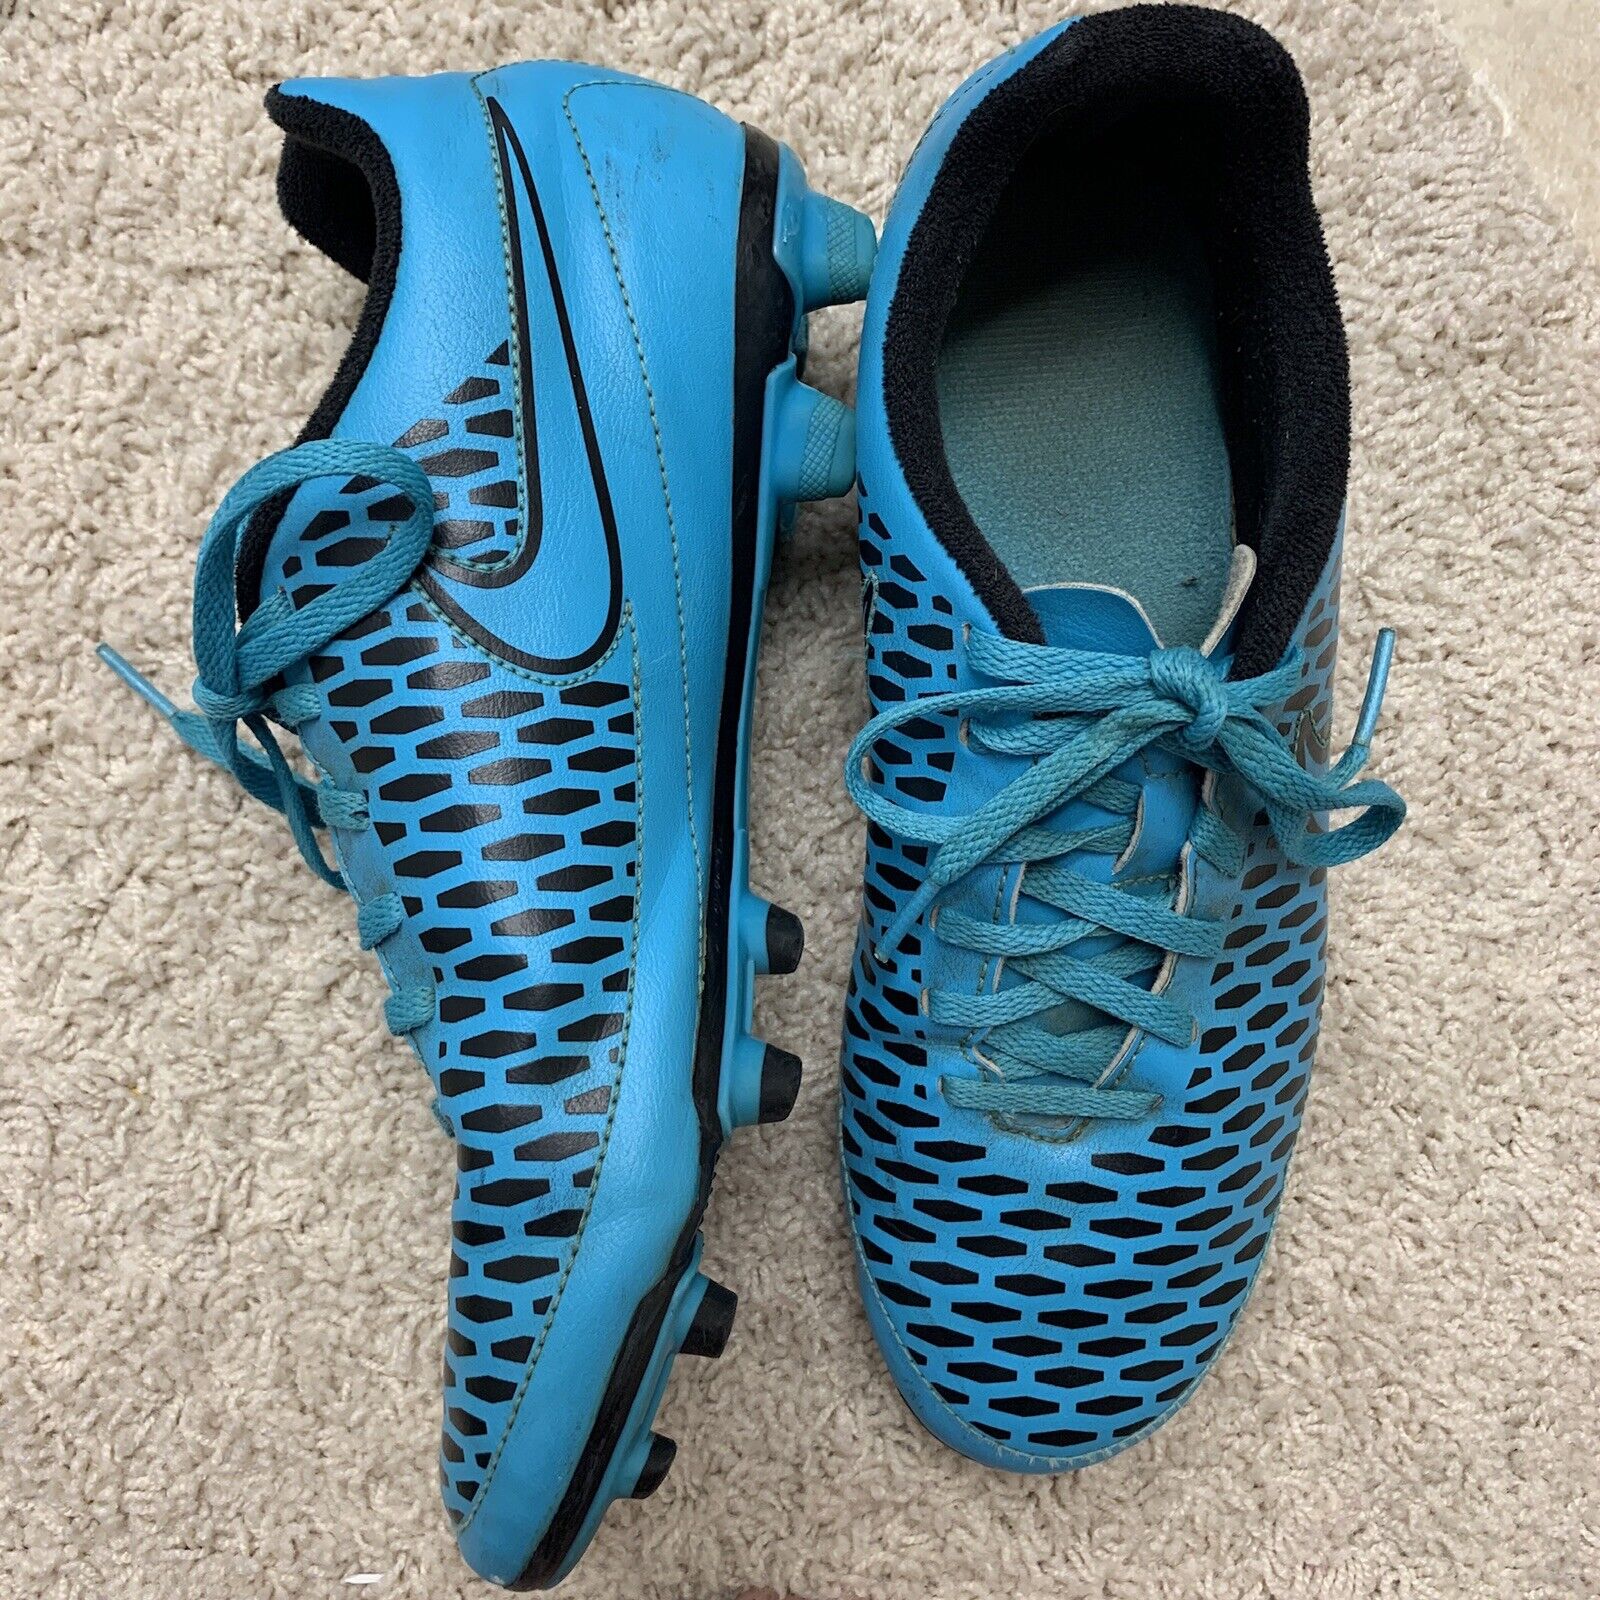 Nike Mens Magista Ole Soccer Cleats Turquoise Black 651343-440 | eBay